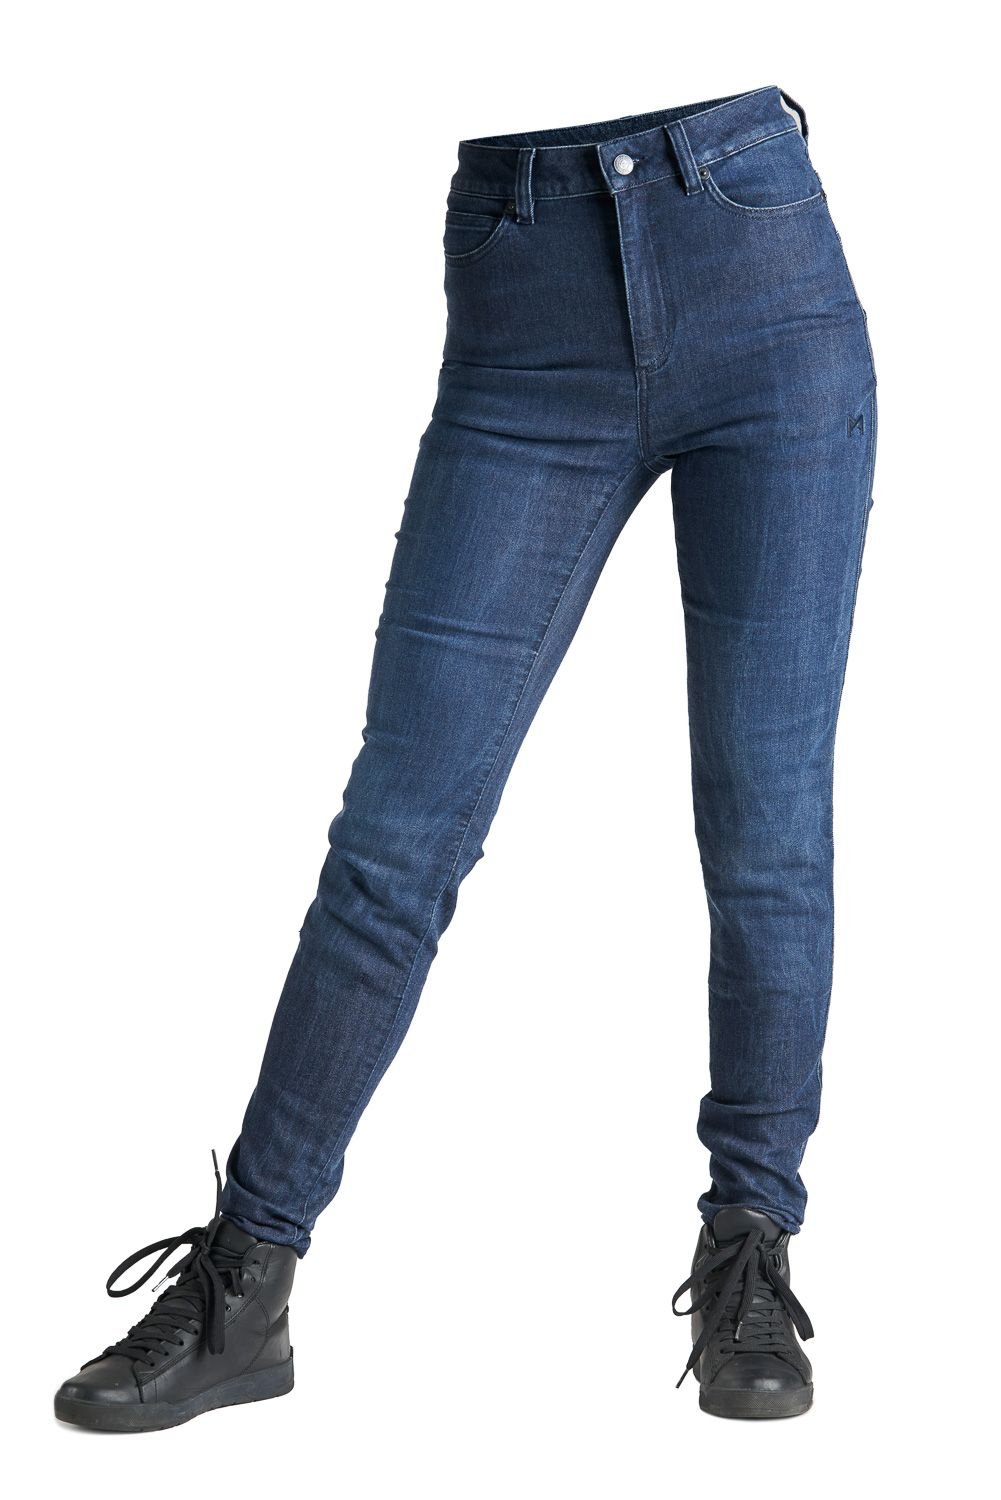 Image of Pando Moto Kusari Cor 02 Women Motorcycle Jeans Skinny-Fit Cordura Size W26/L32 EN